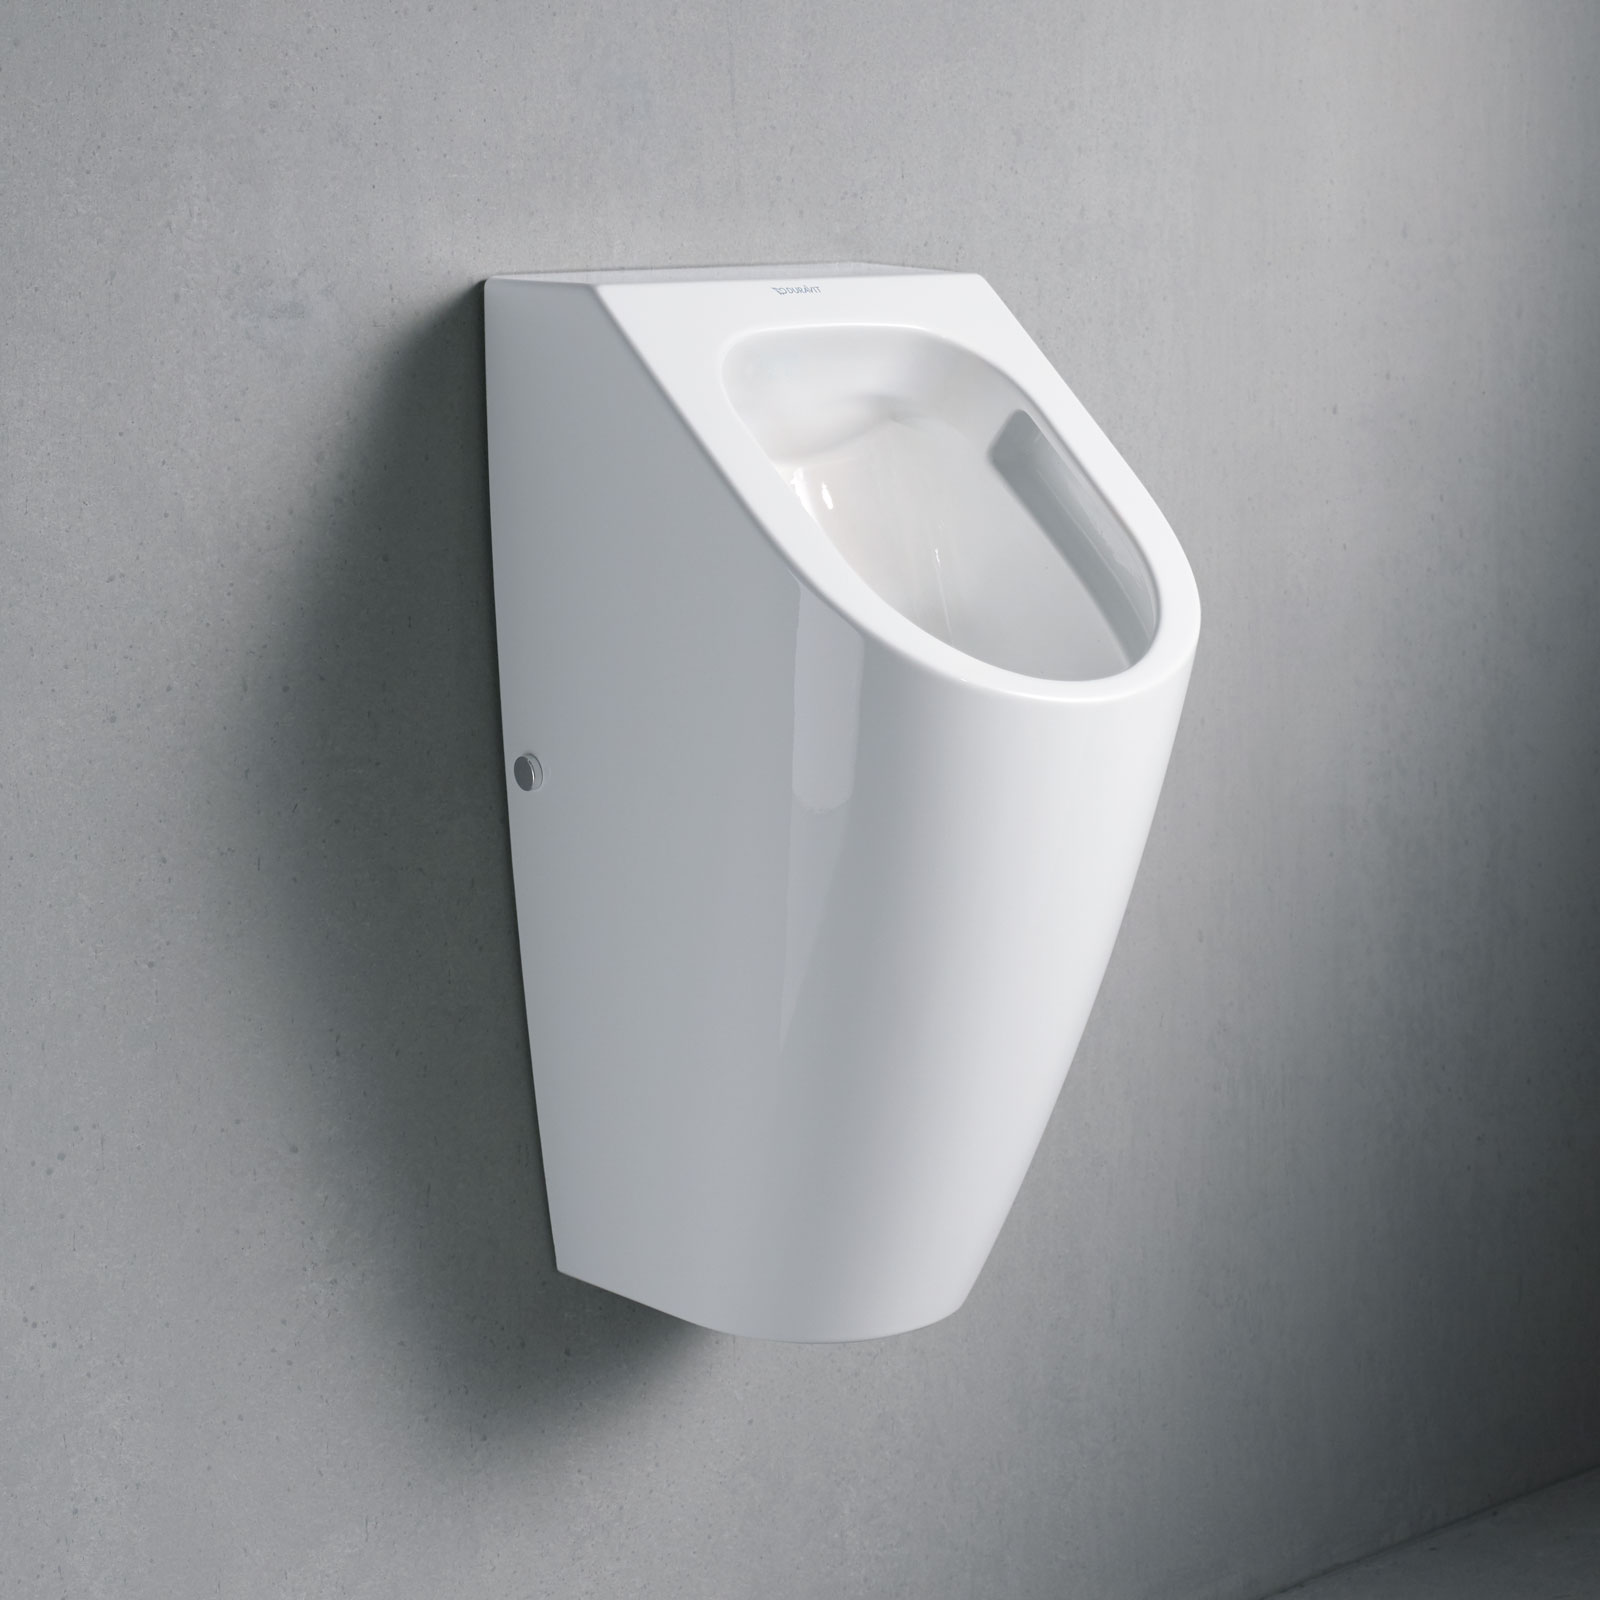 Urinal on grey wall
